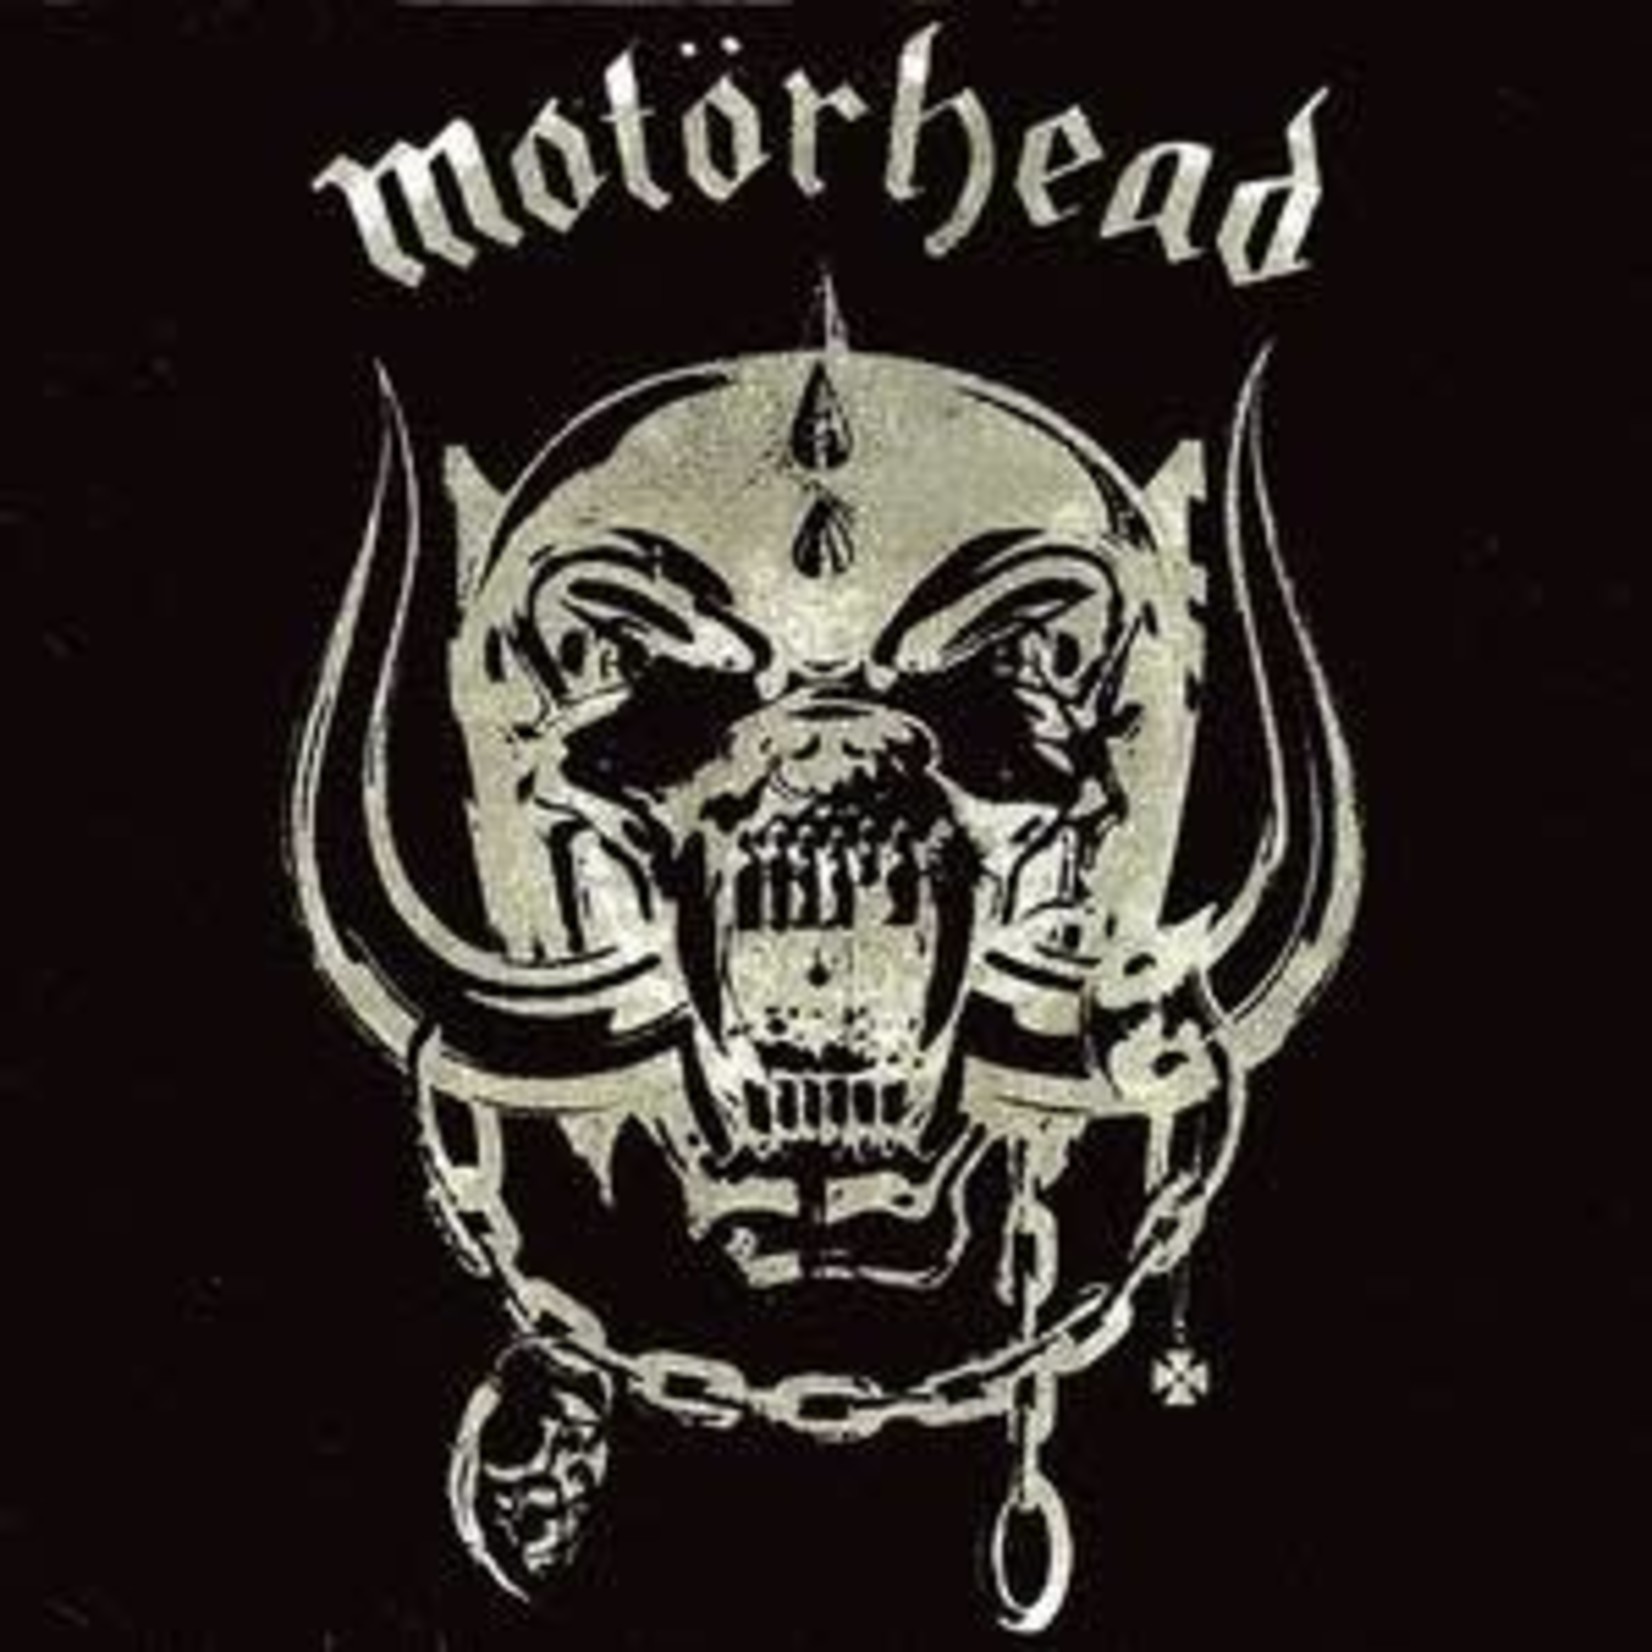 New] Motorhead - Motorhead (40th anniversary, white vinyl) - Kops